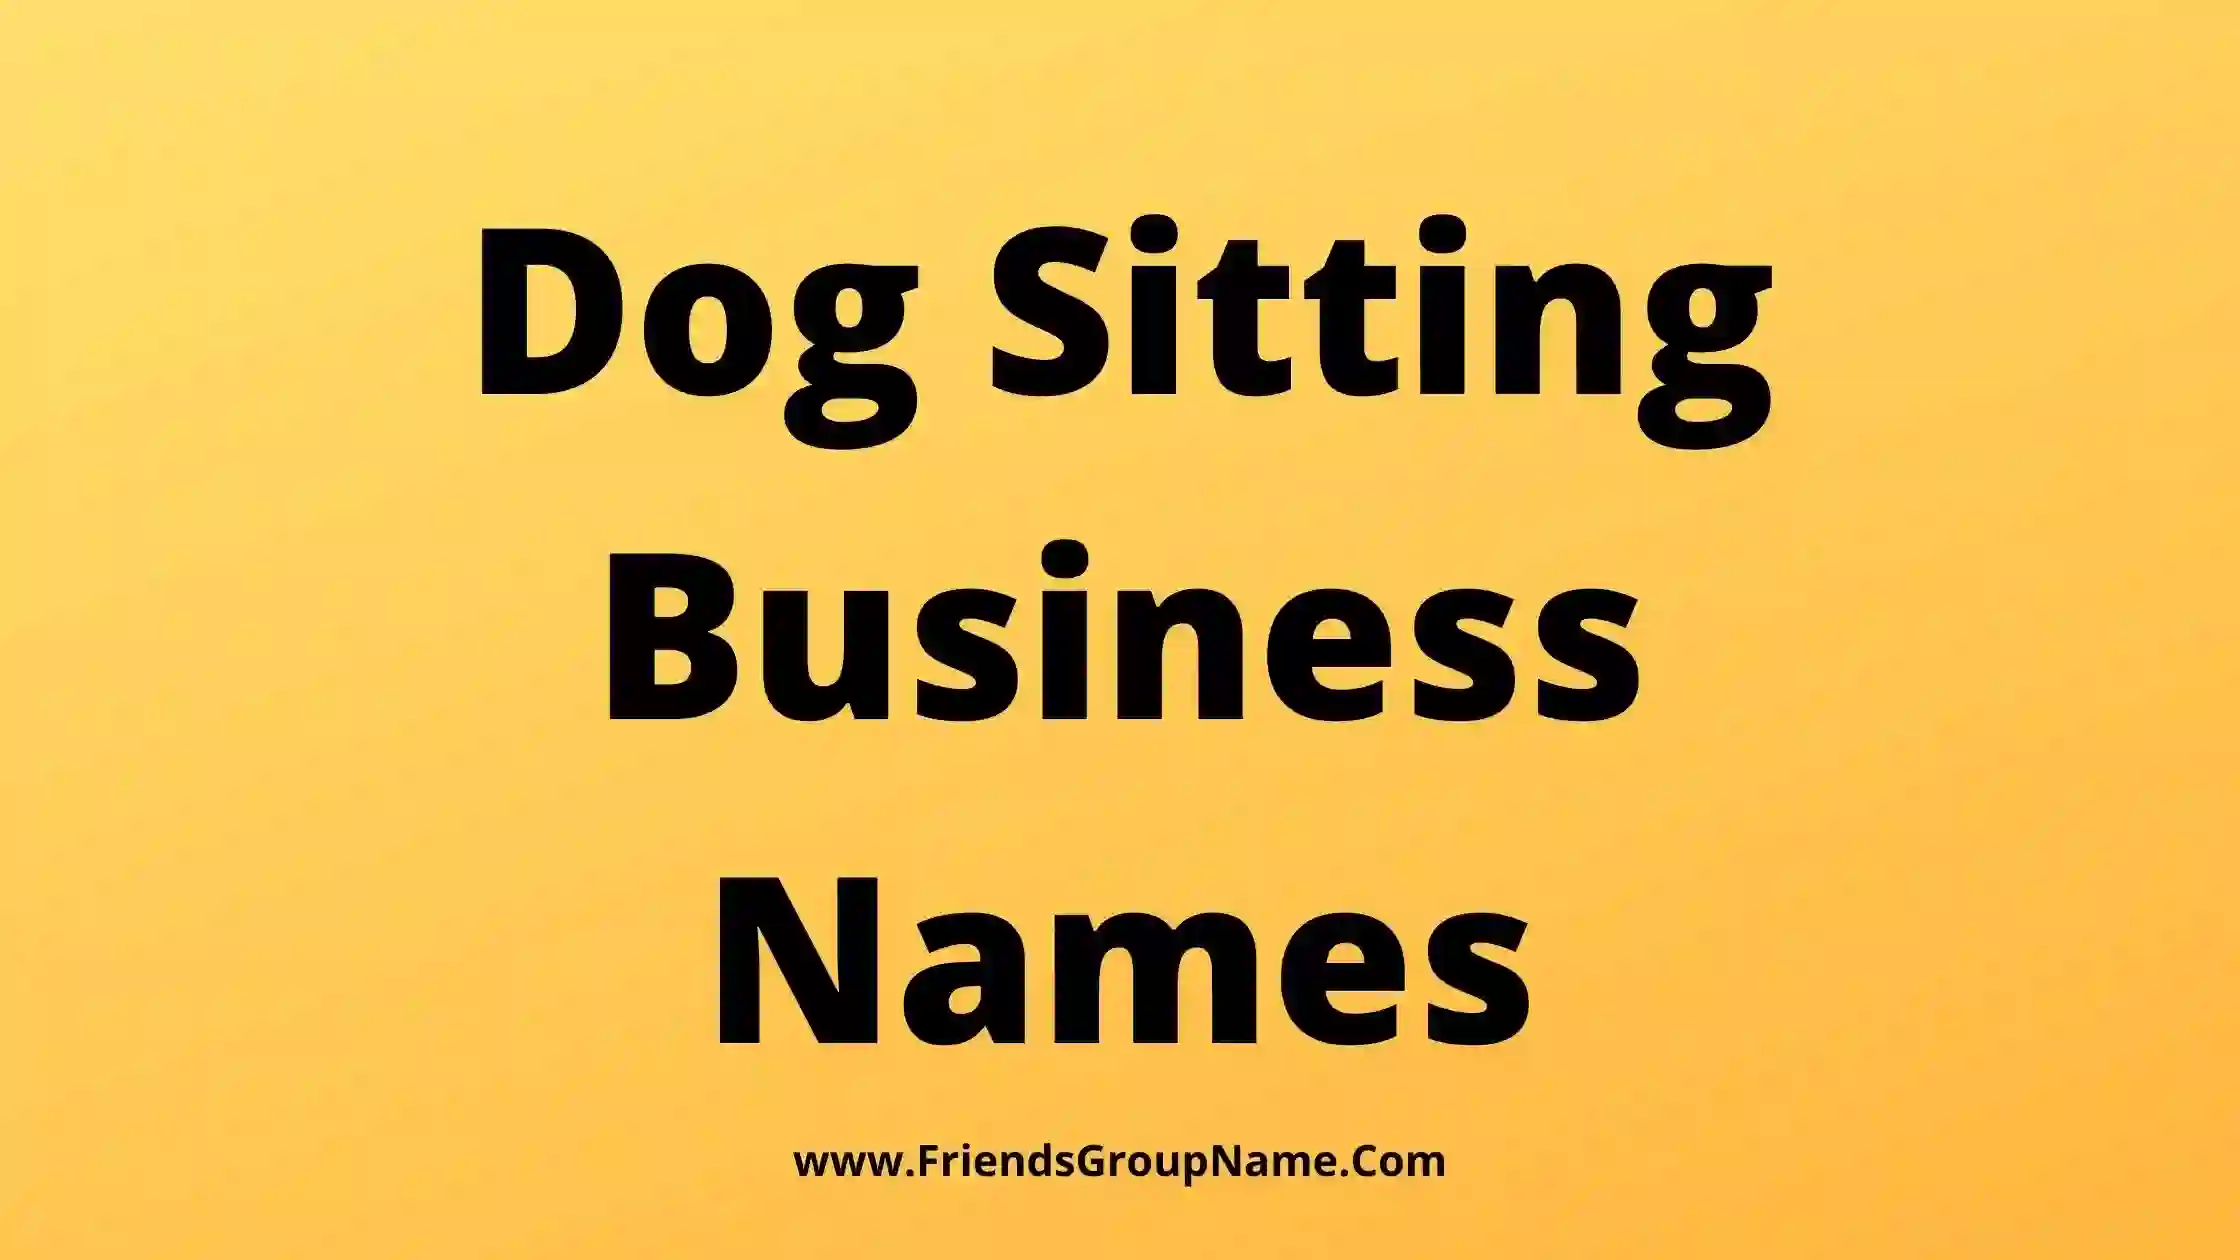 Dog Sitting Business Names